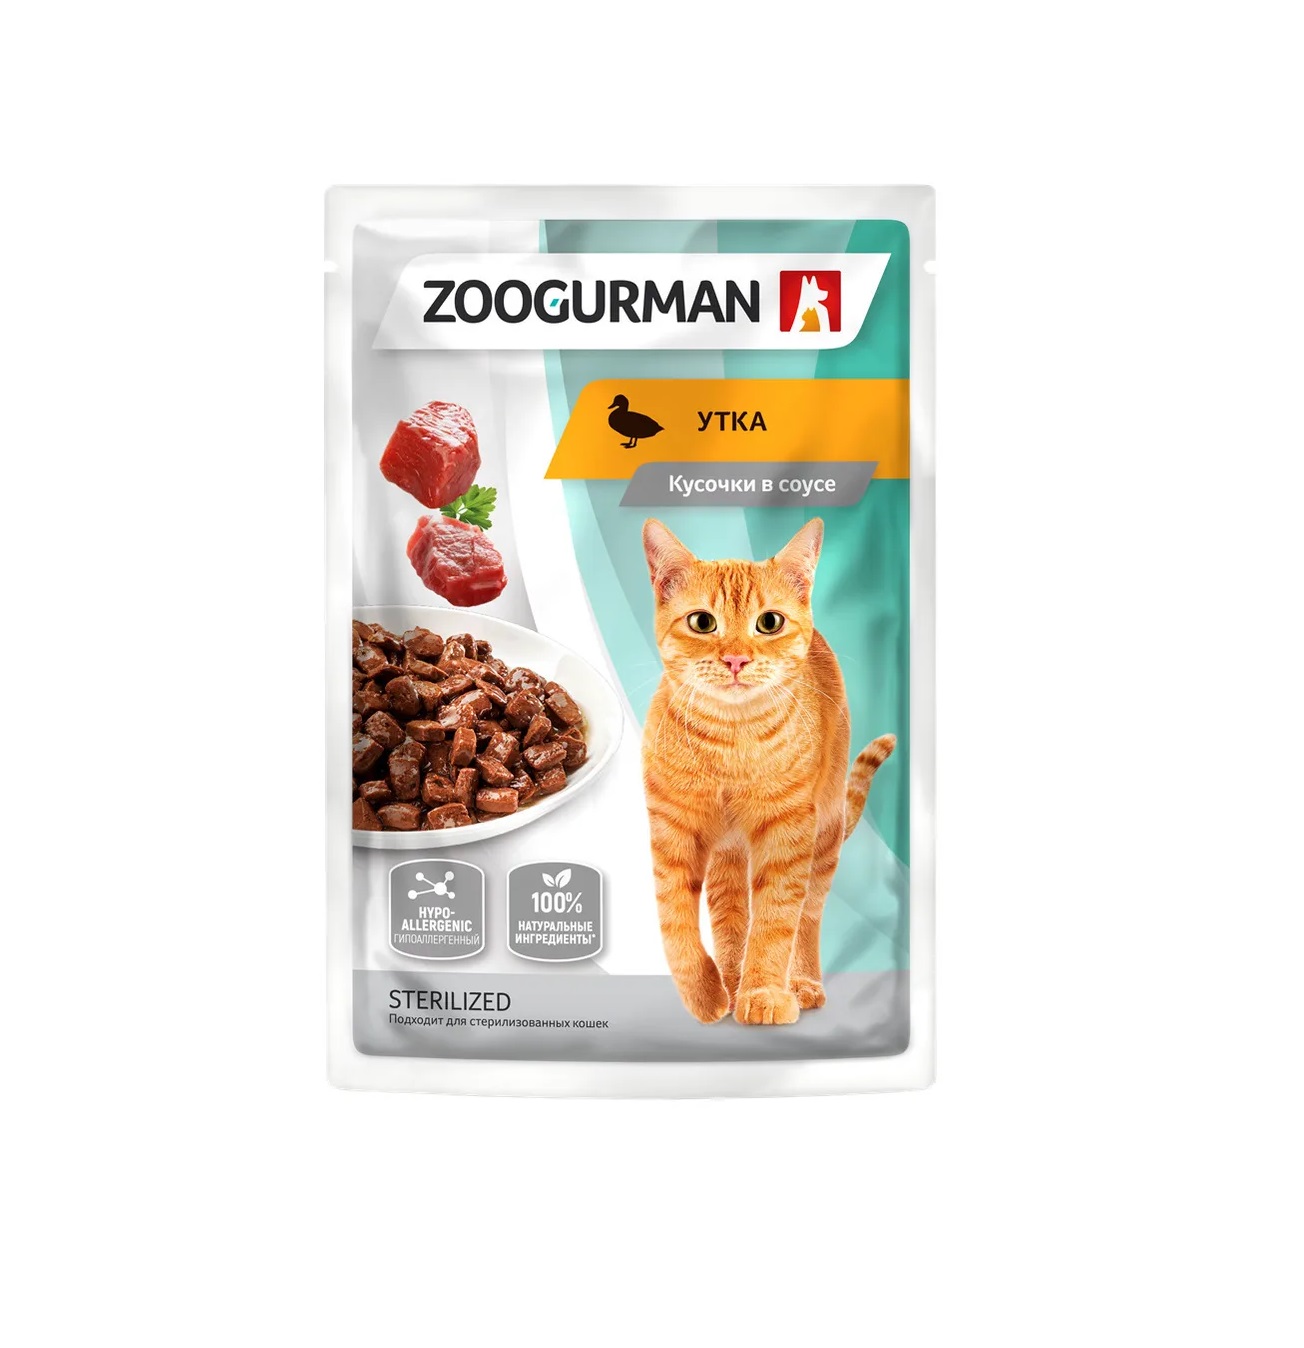 Зоогурман 85гр - Утка в Соусе - консервы для кошек